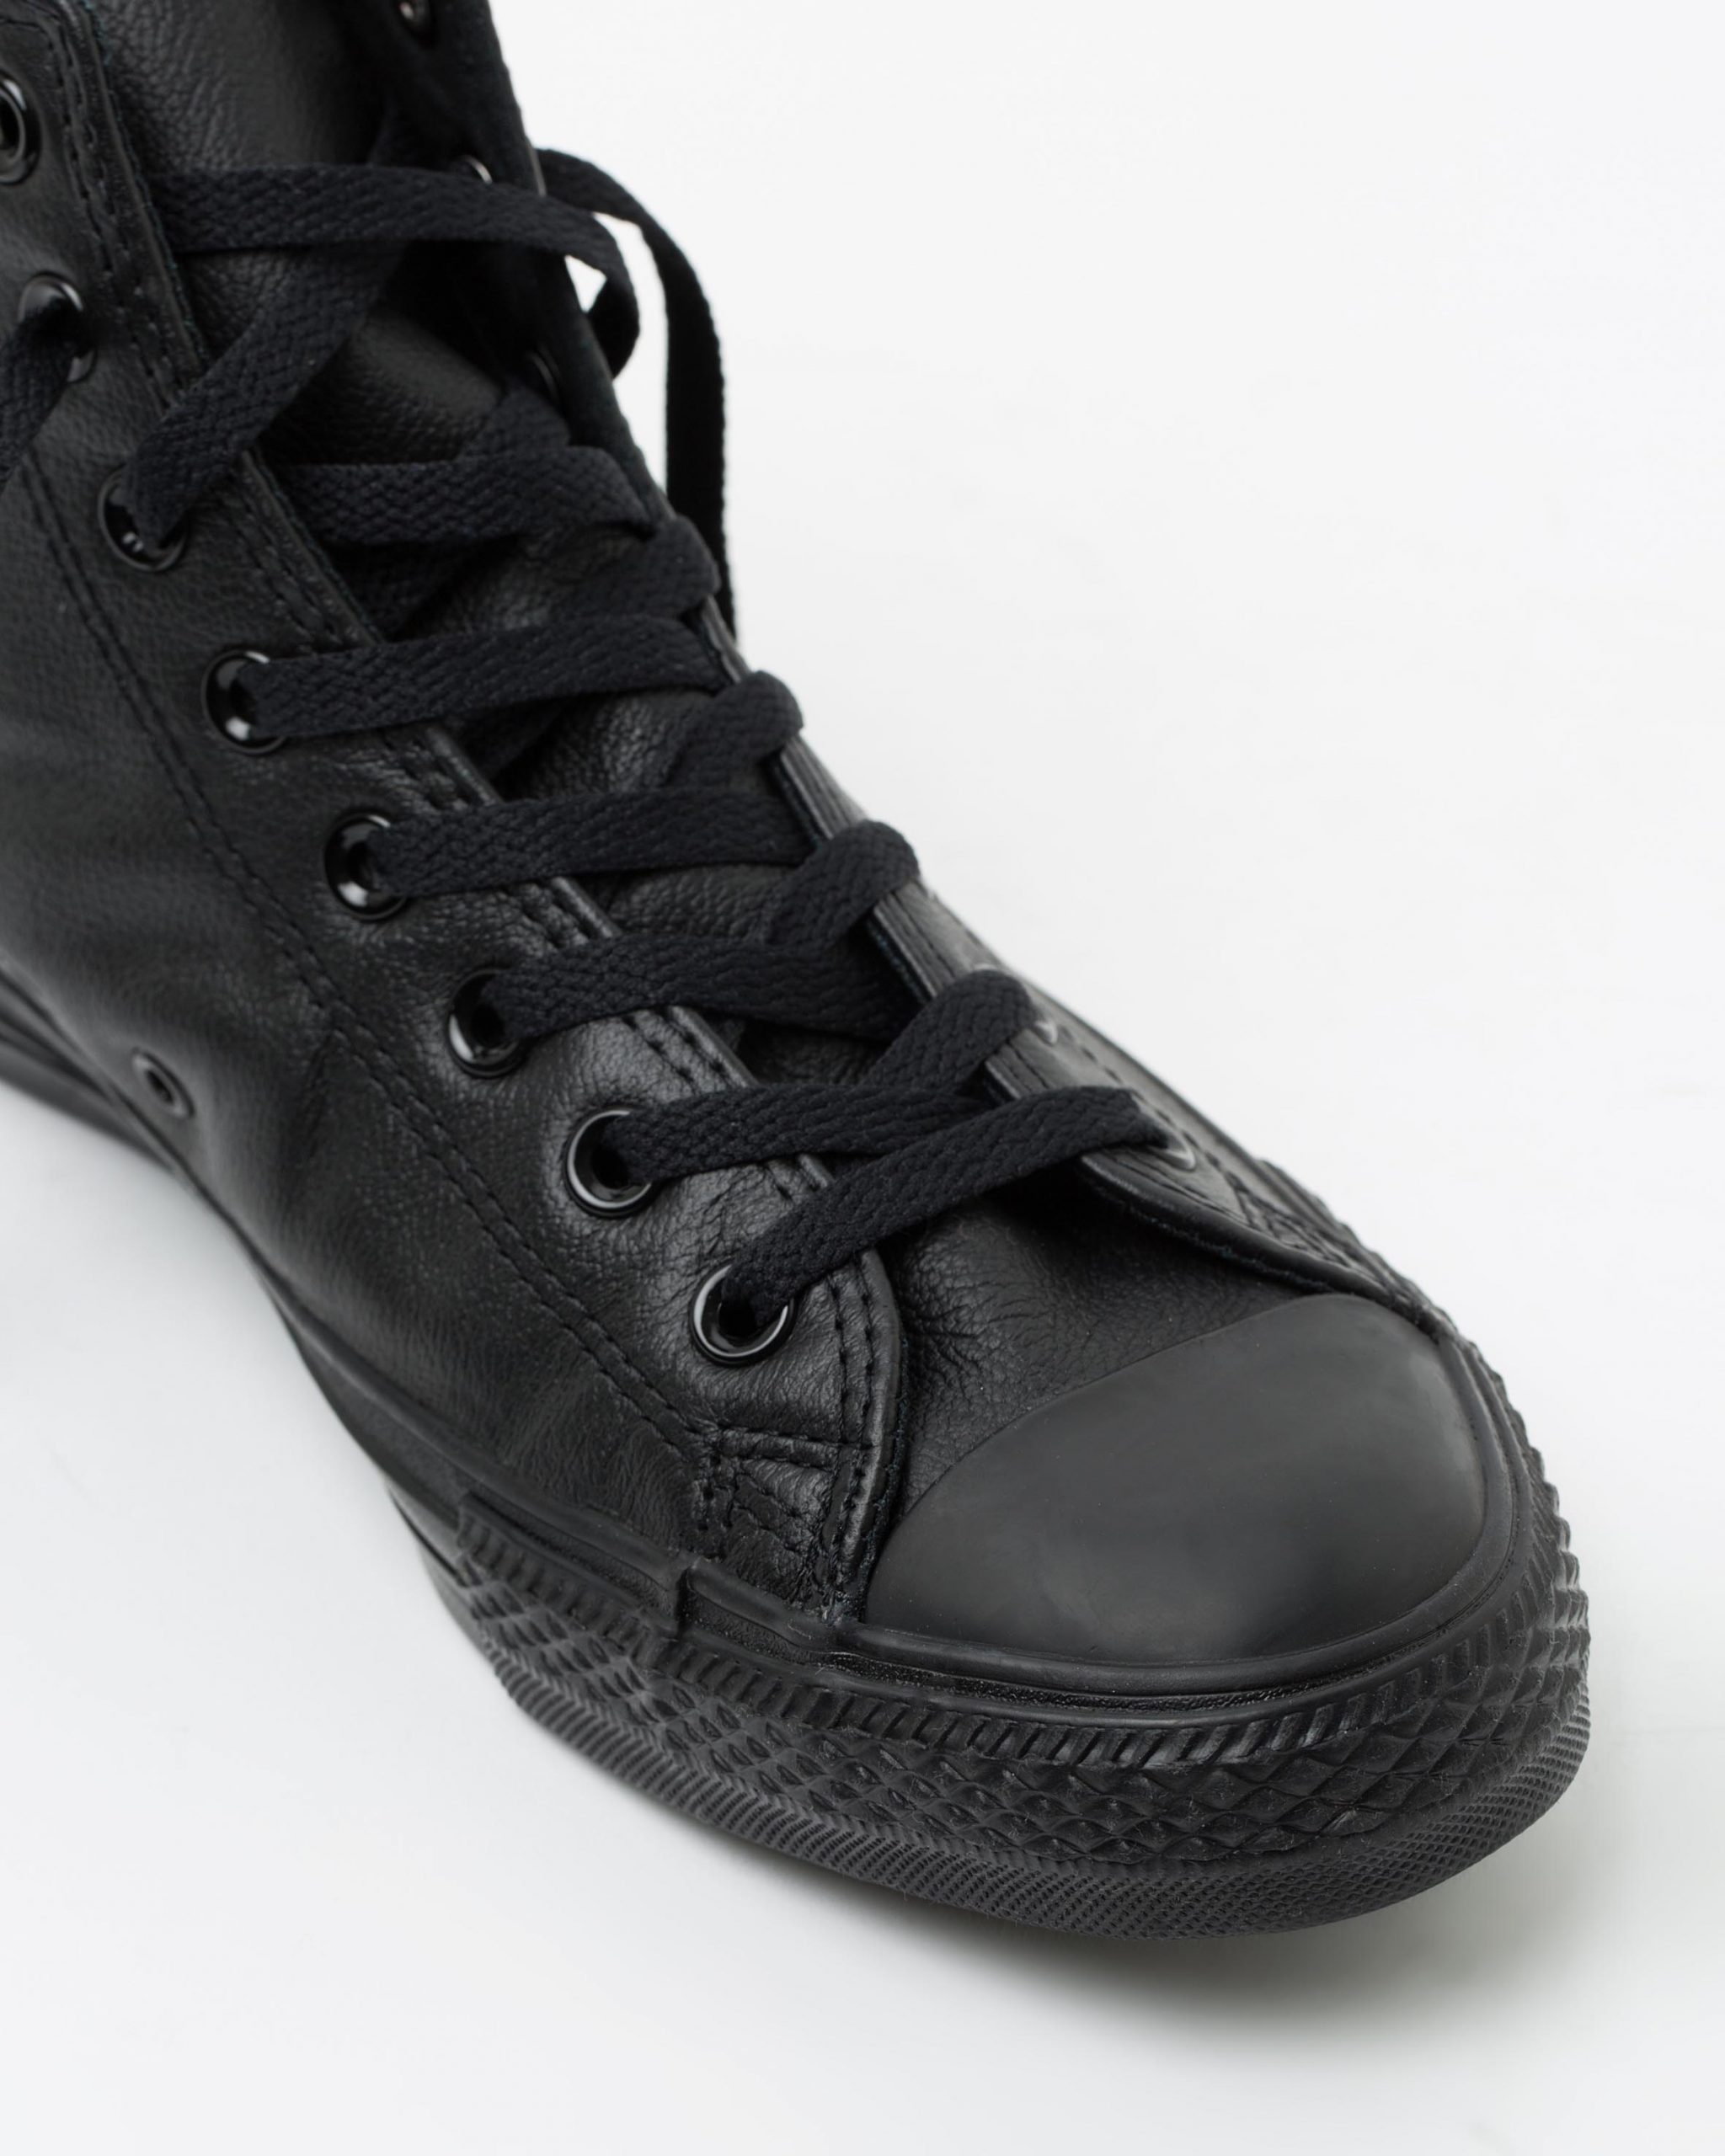 all black leather converse sale